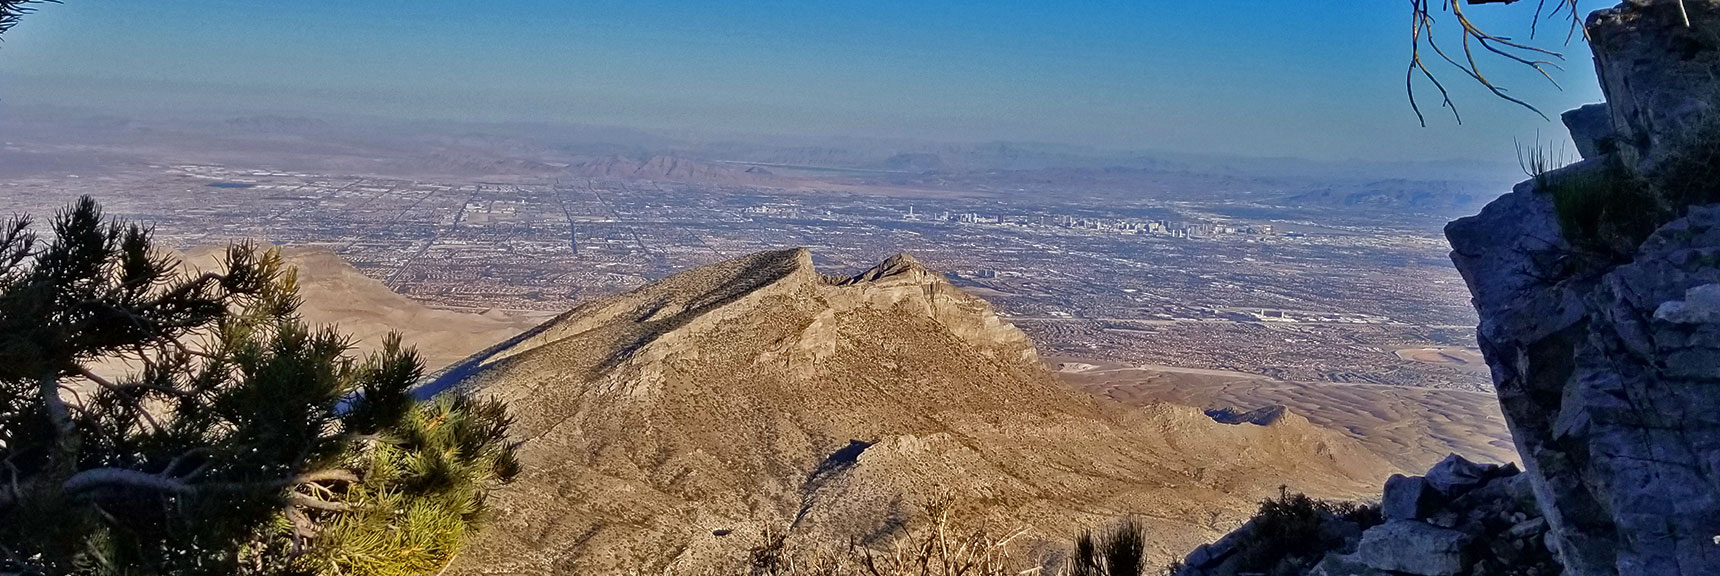 Damsel Peak Through Opening on La Madre Mountain | La Madre Mountain,, El Padre Mountain, Burnt Peak | La Madre Mountains Wilderness, Nevada